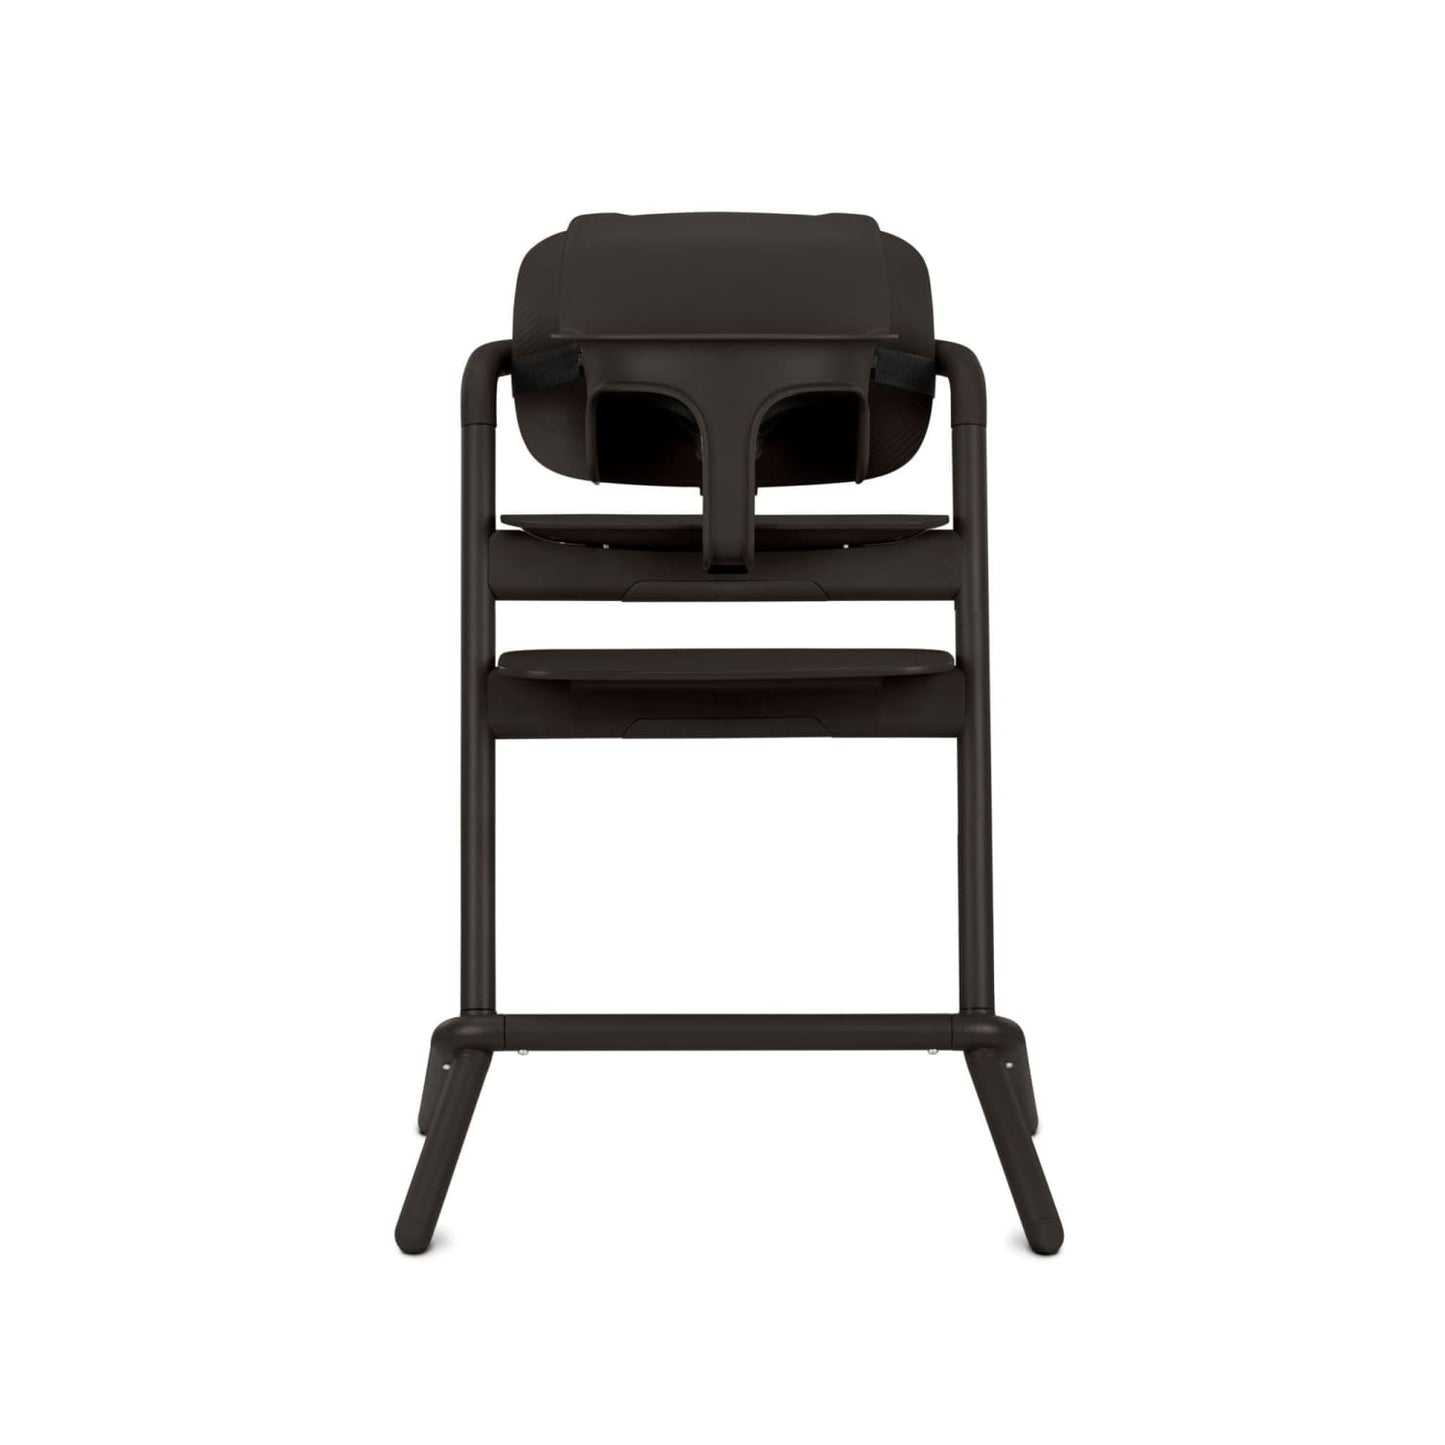 CYBEX Lemo Baby High Chair - Infinity Black - High Chair